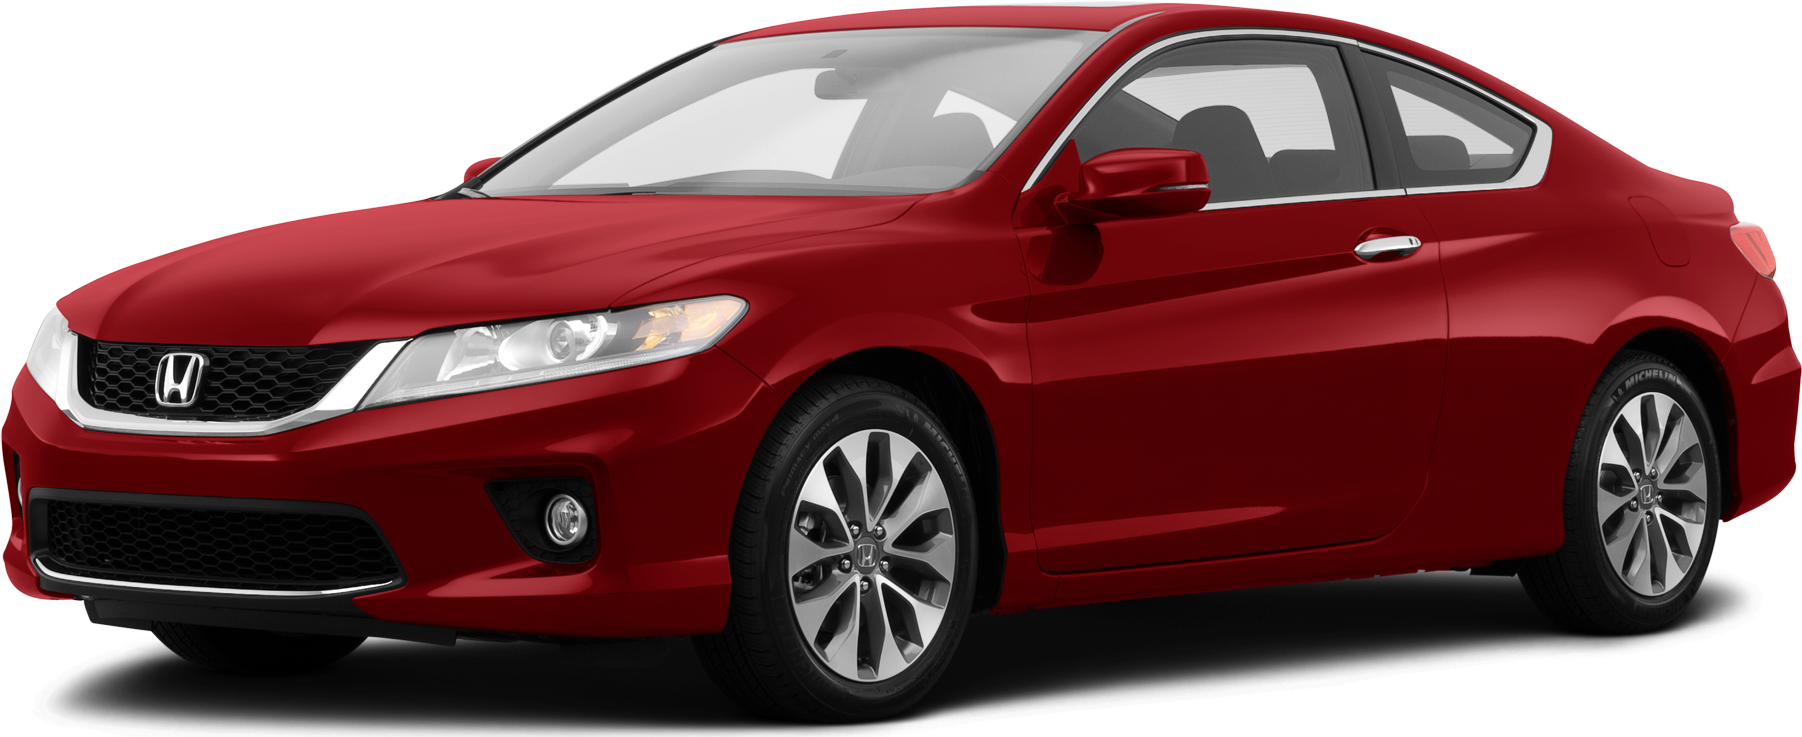 2014 Honda Accord Values & Cars for Sale Kelley Blue Book